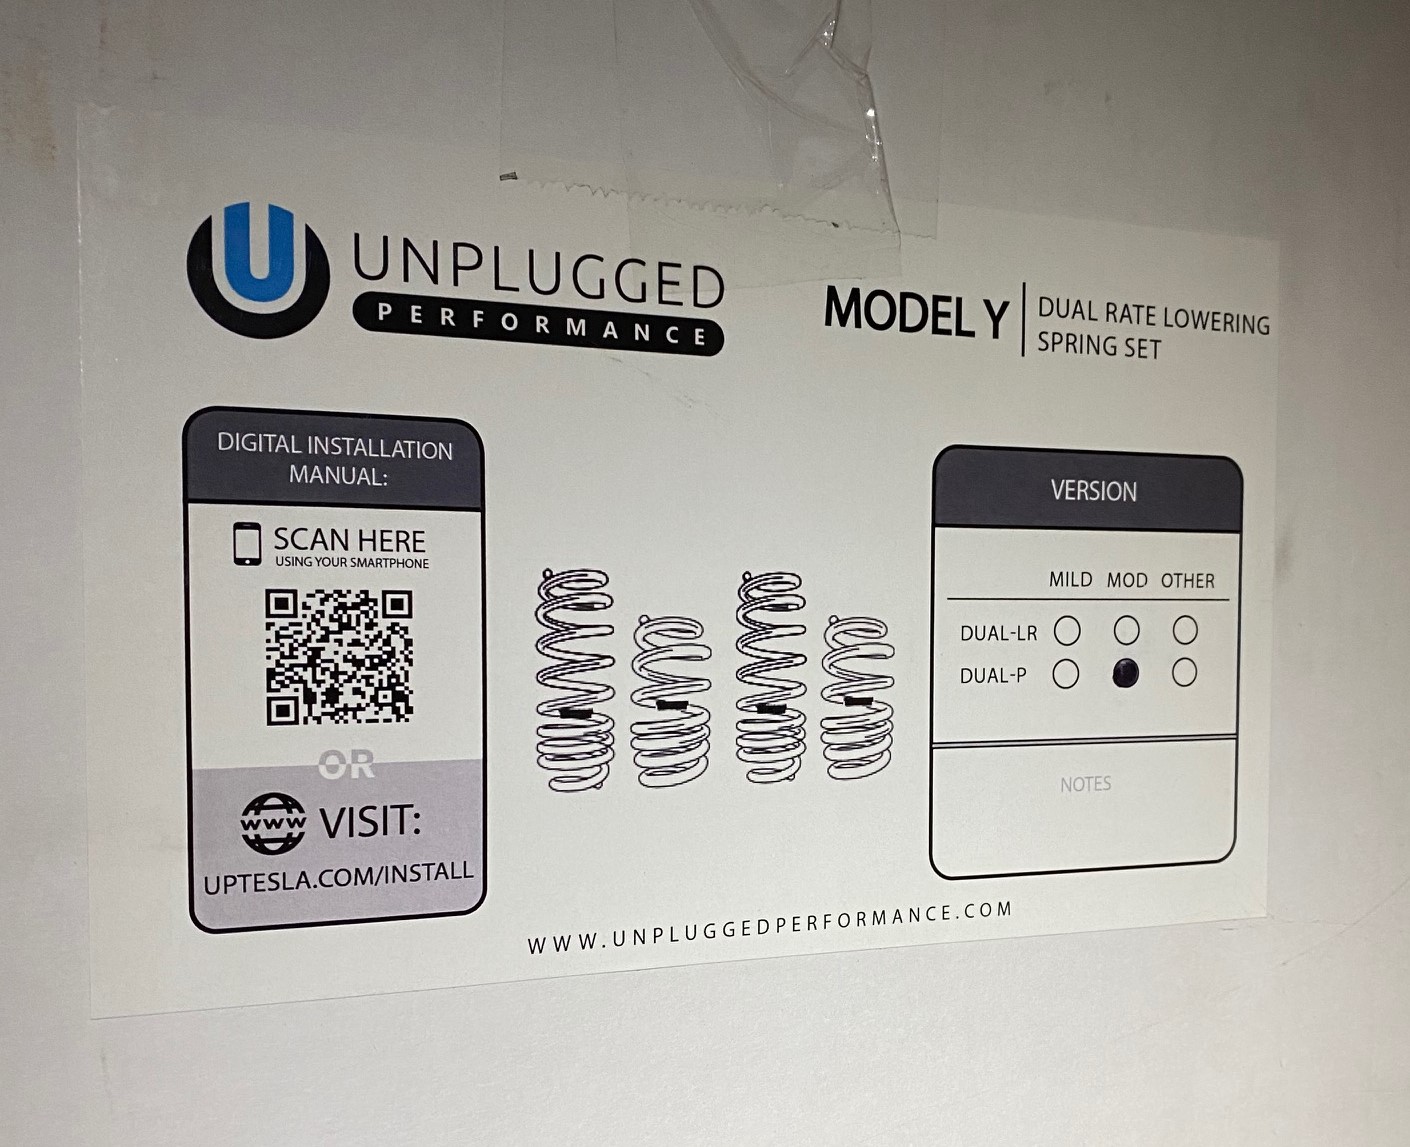 UPP ModelY Perform Mod springs.jpg